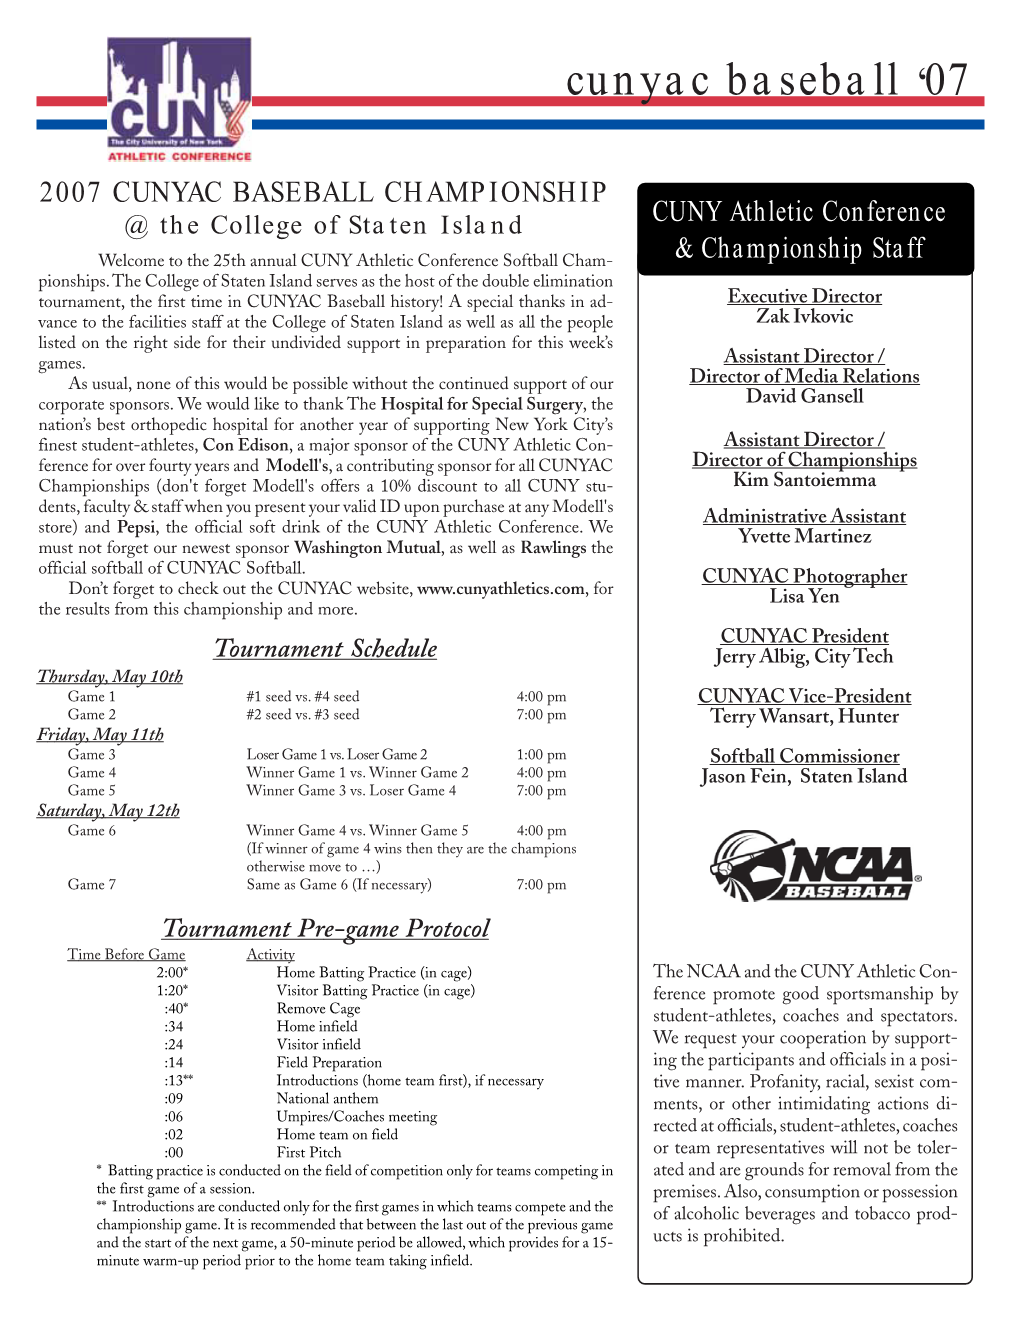 2007 Softball Program